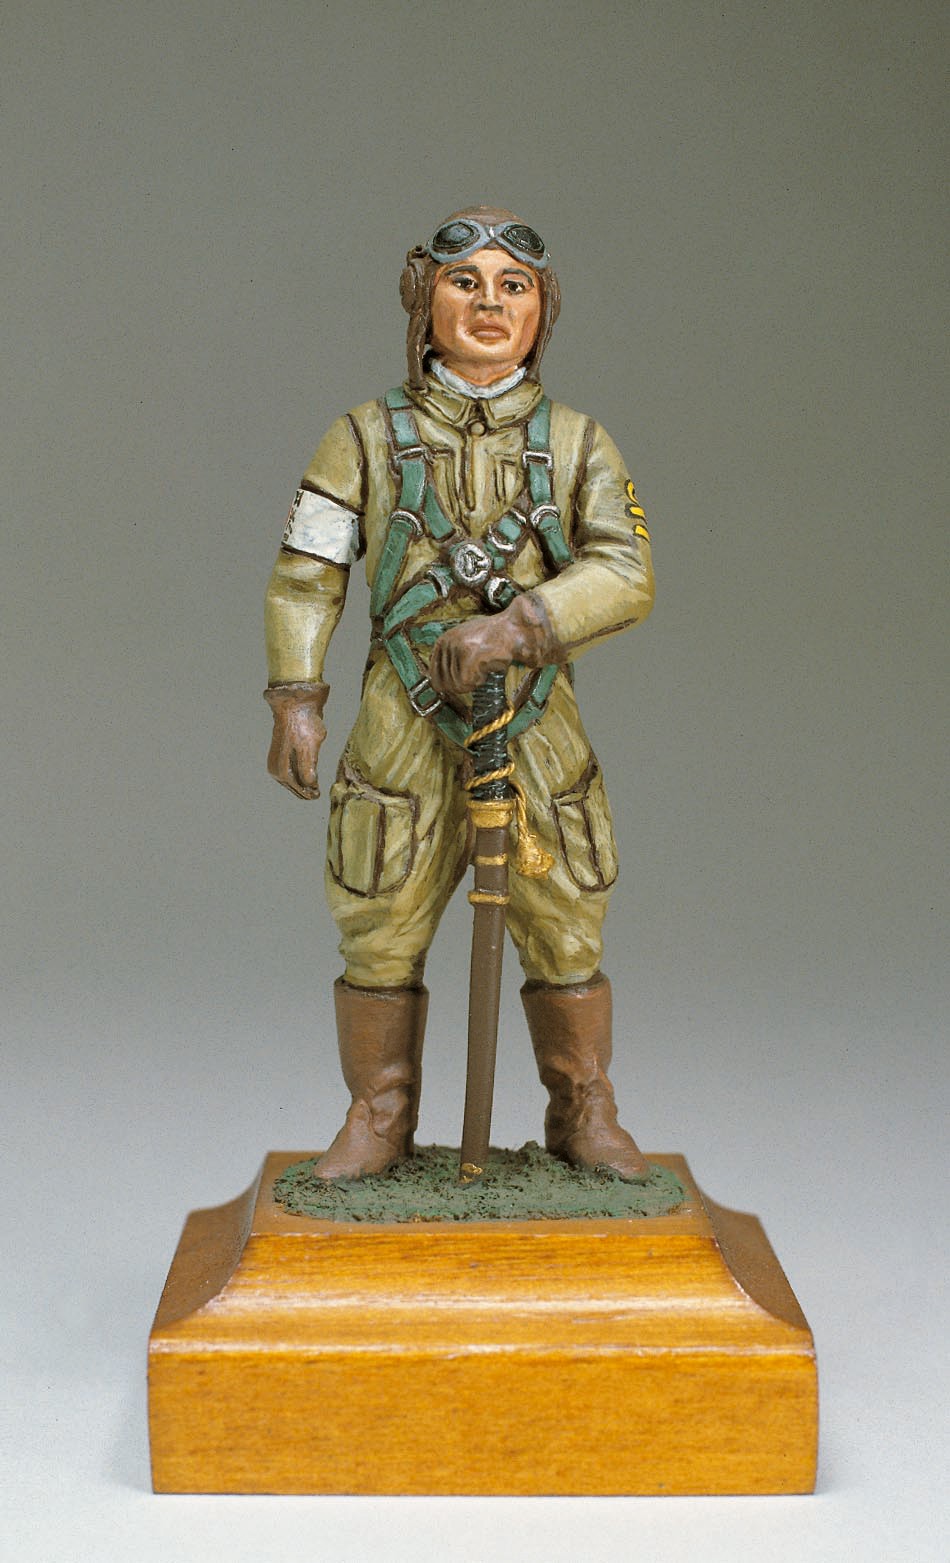 WWII Japanese Pilot Figurine (Amati)